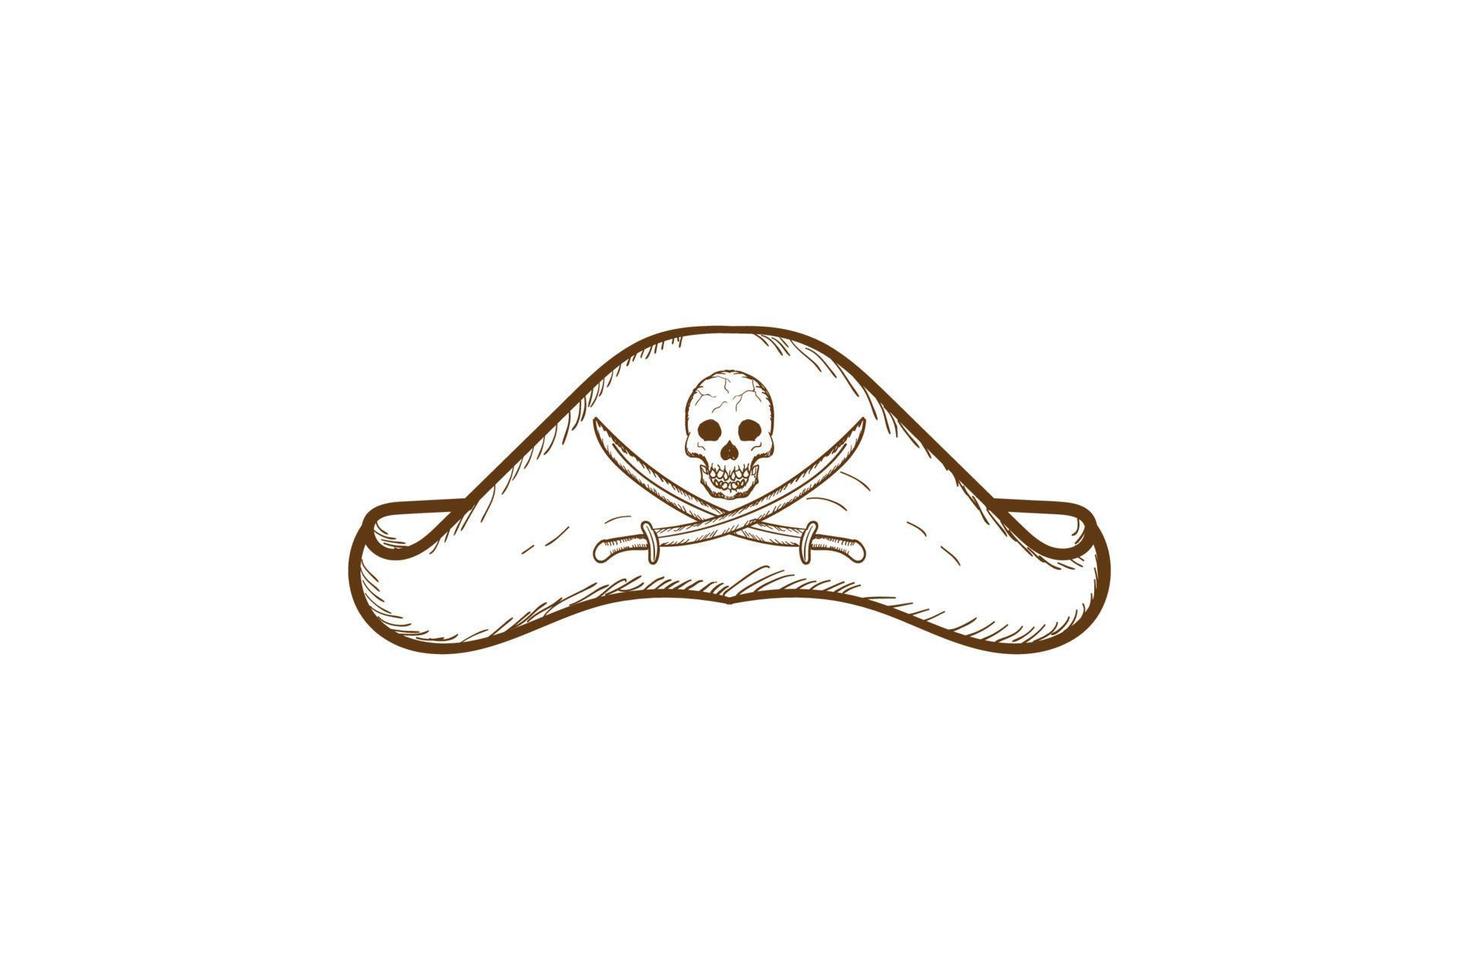 cappello da marinaio pirati retrò vintage con spada e teschio emblema logo design vettoriale